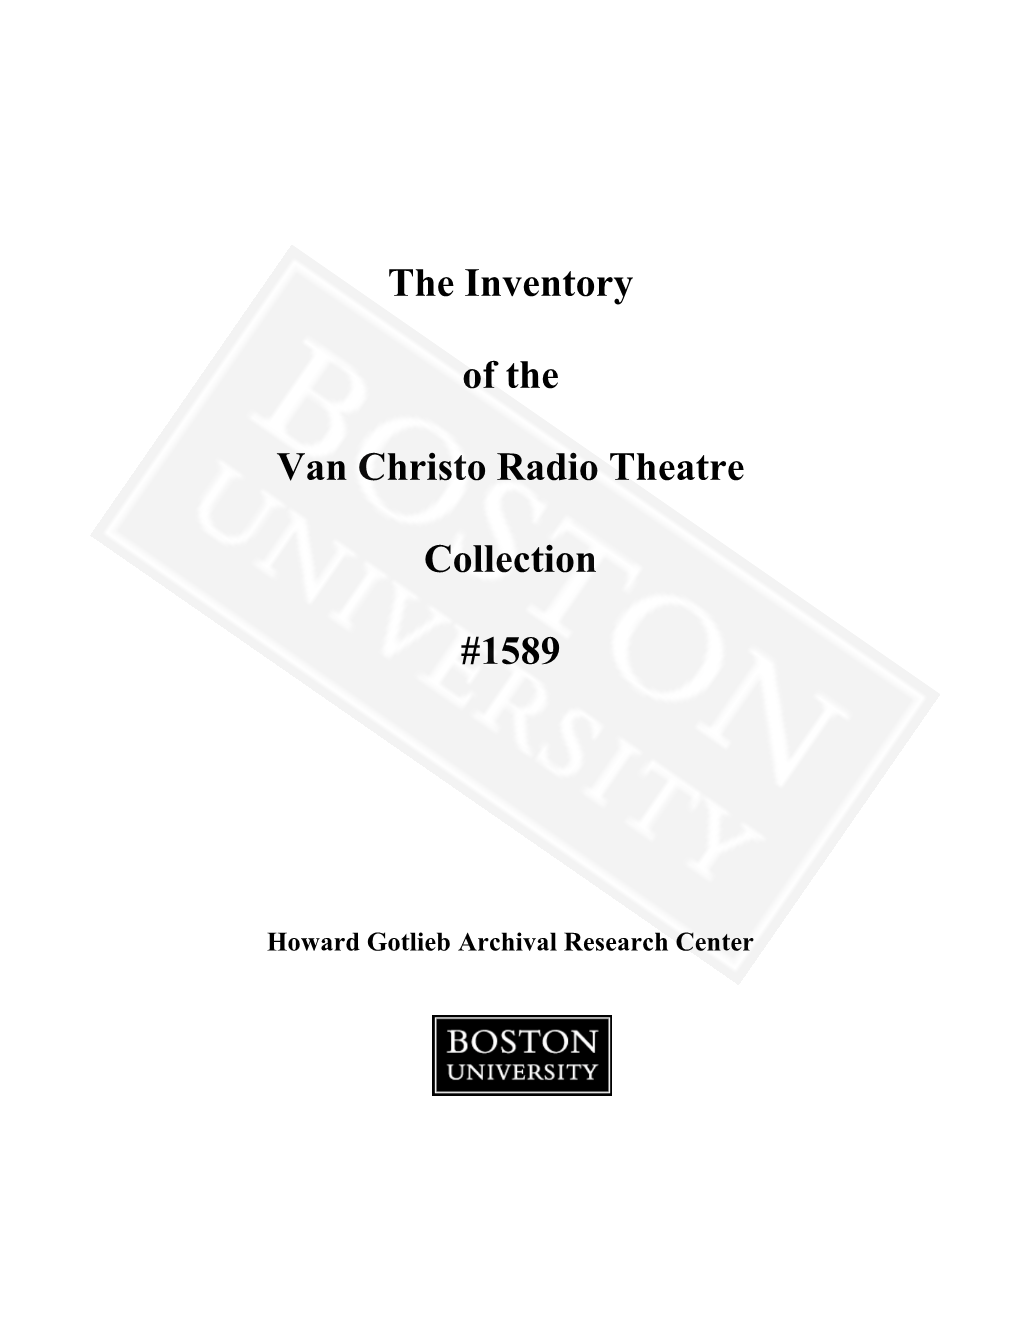 The Inventory of the Van Christo Radio Theatre Collection #1589